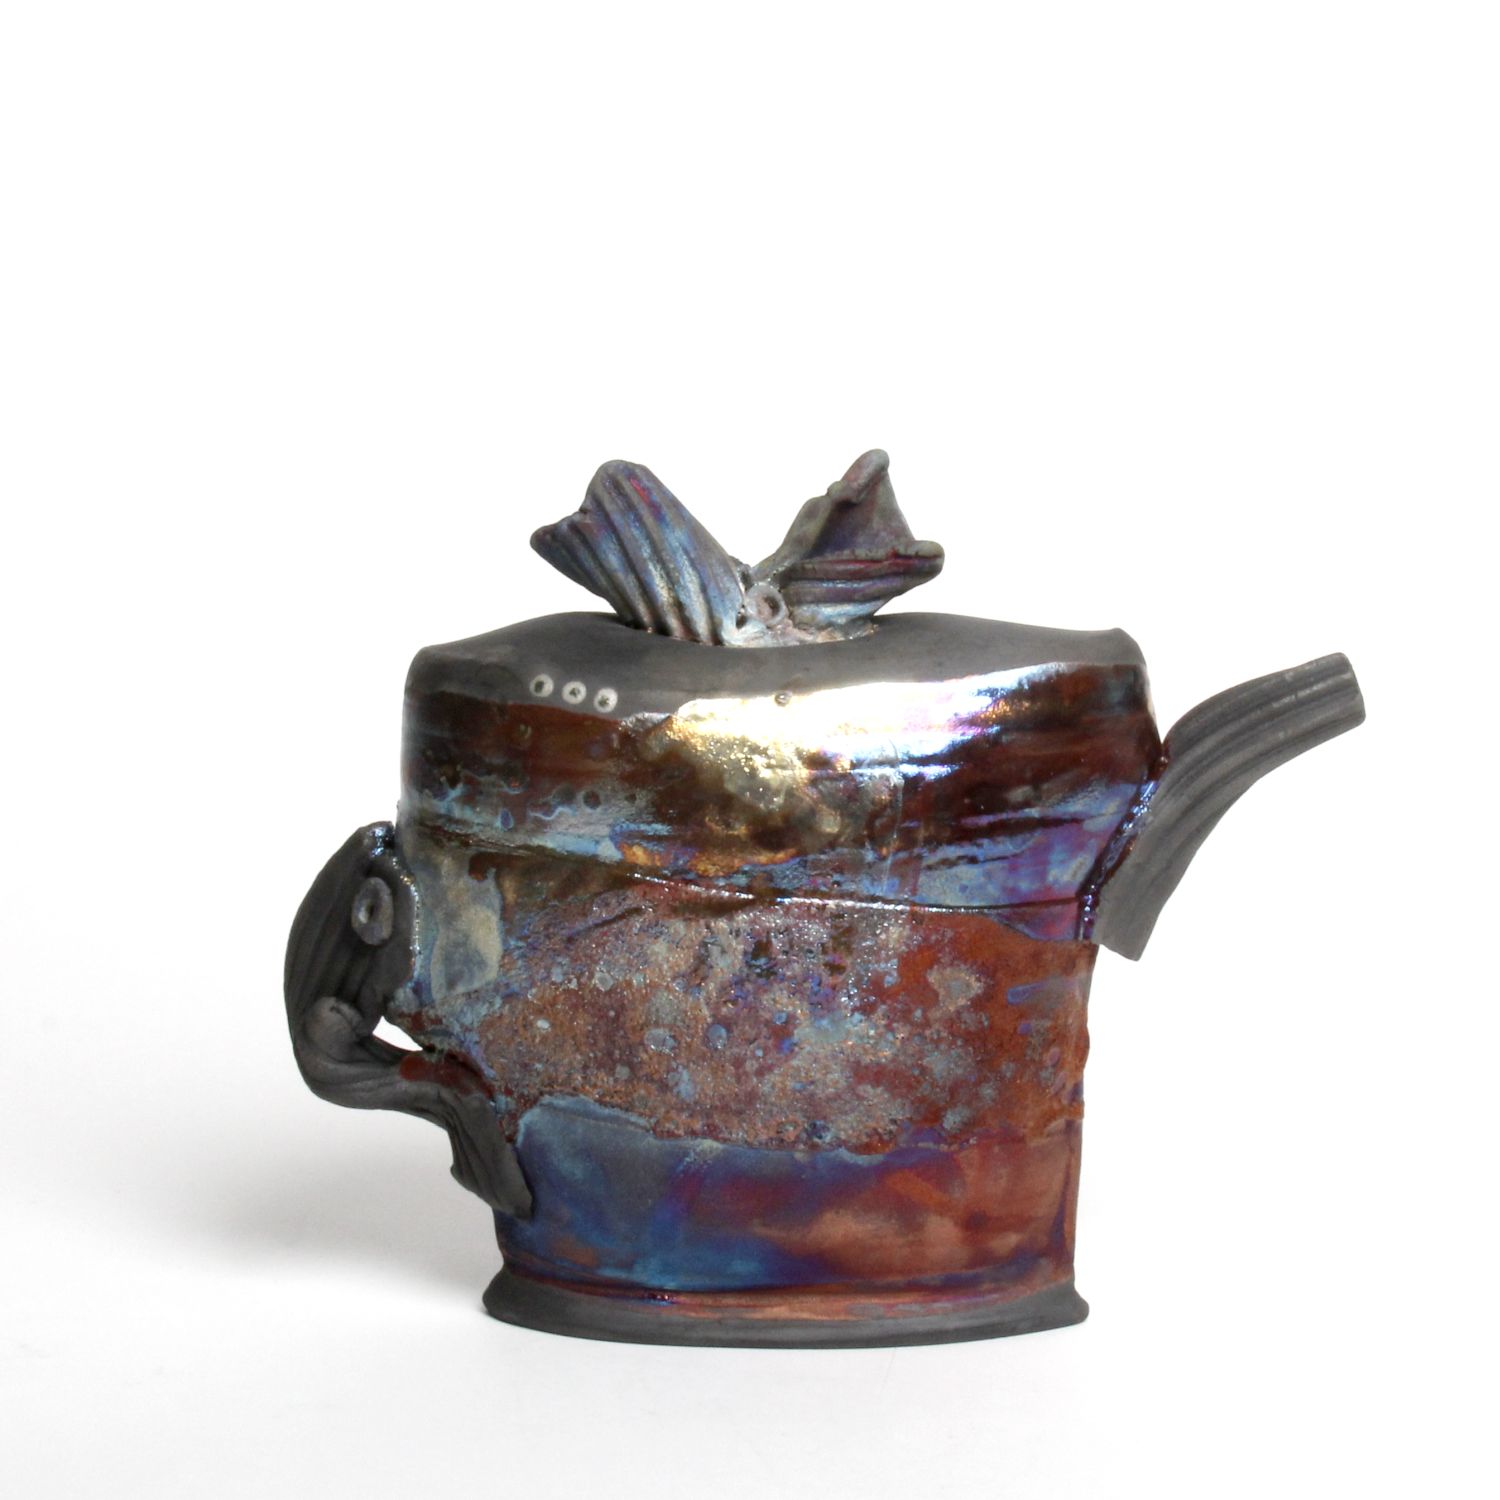 Shu-Chen Cheng: Abstract Lustre Raku Teapot Product Image 3 of 3